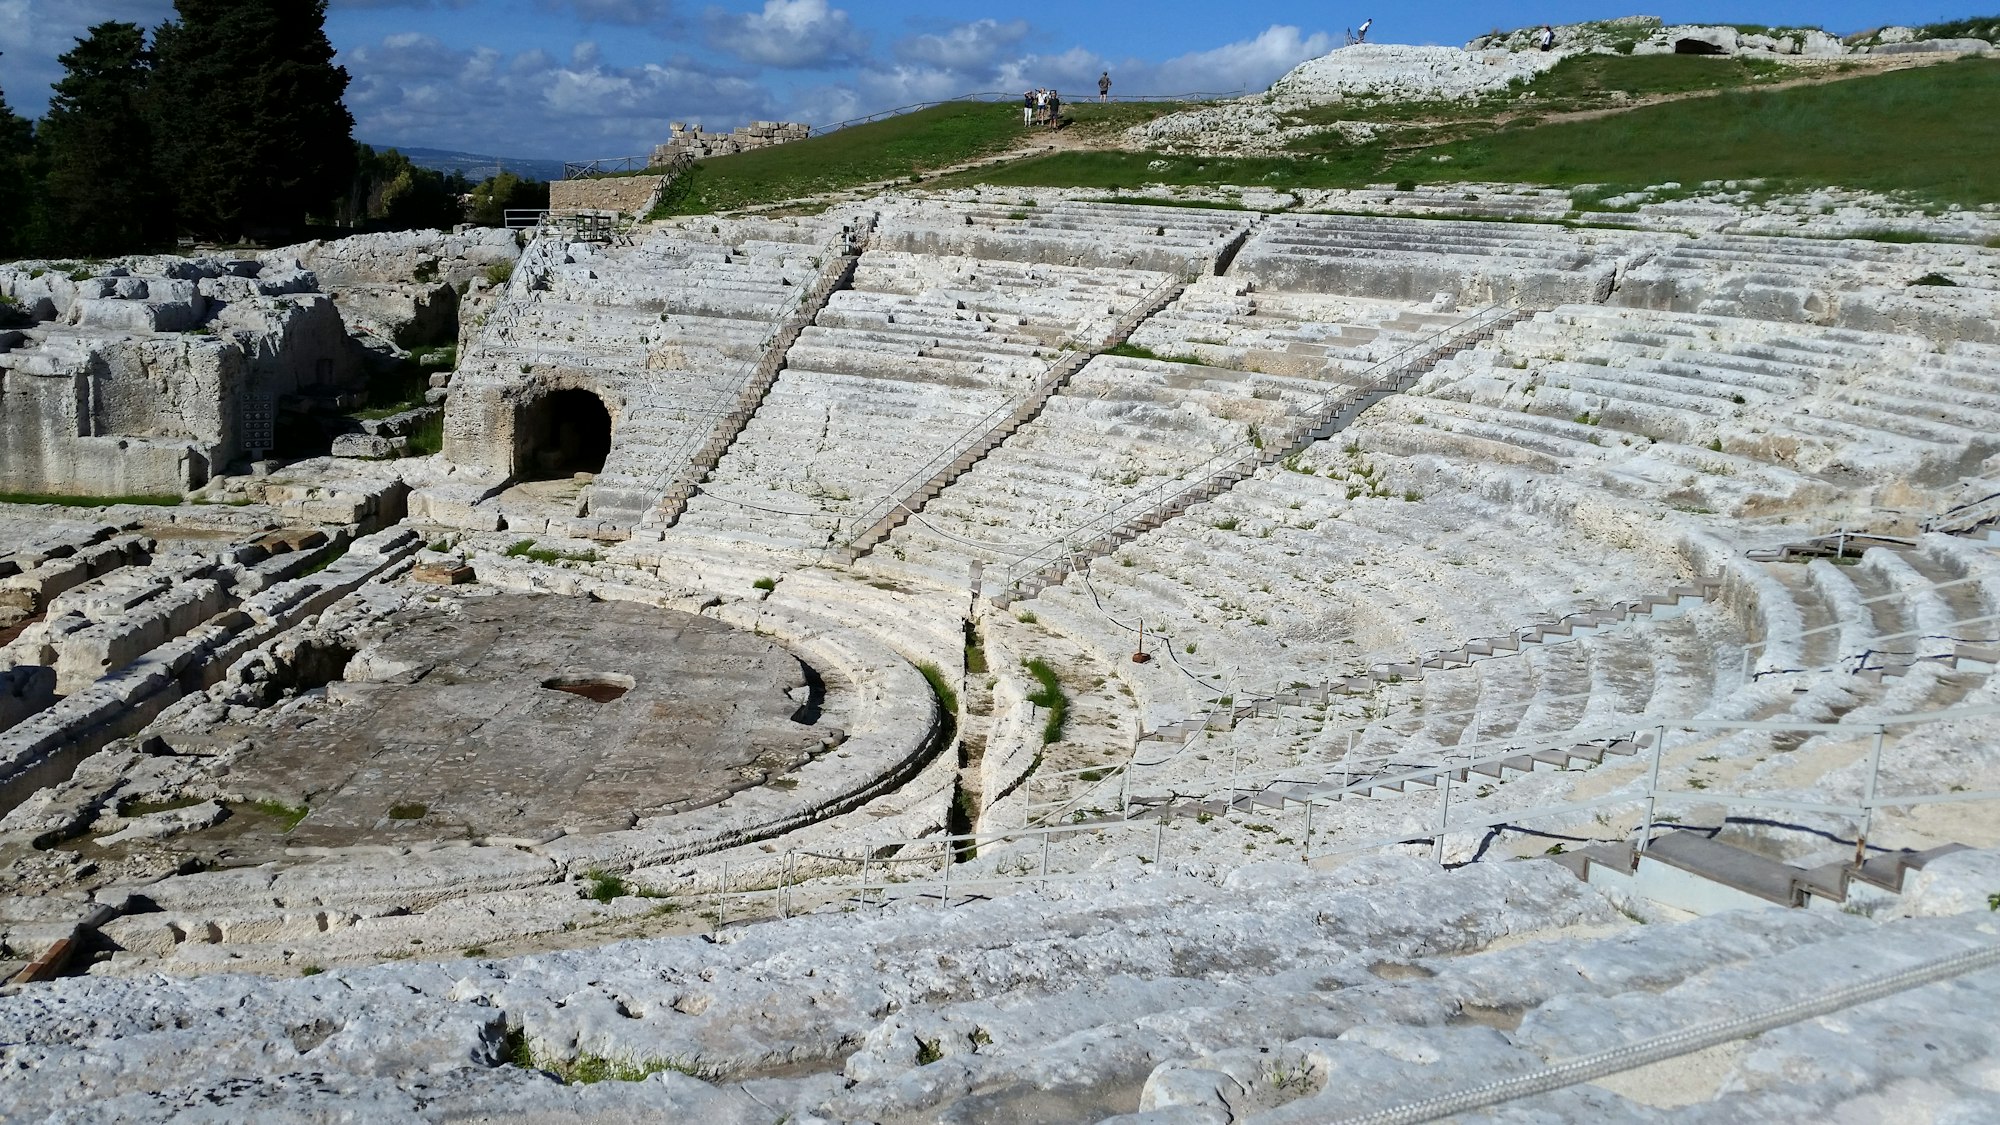 Ancient Teatro Greco (Greek Theatre) in Siracusa, Sicily